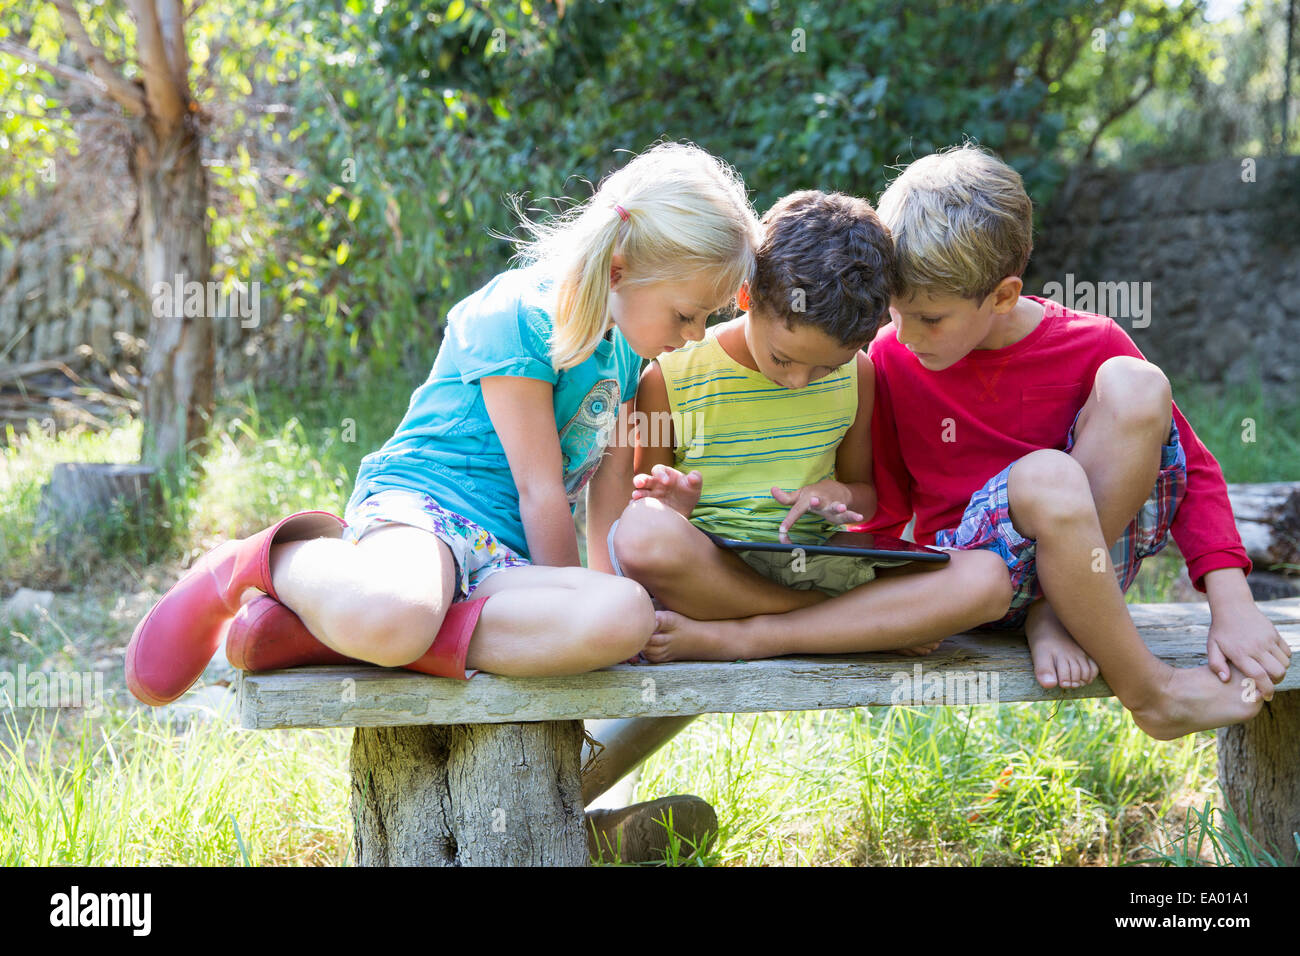 Three children sitting on garden seat looking down at digital tablet Stock Photo